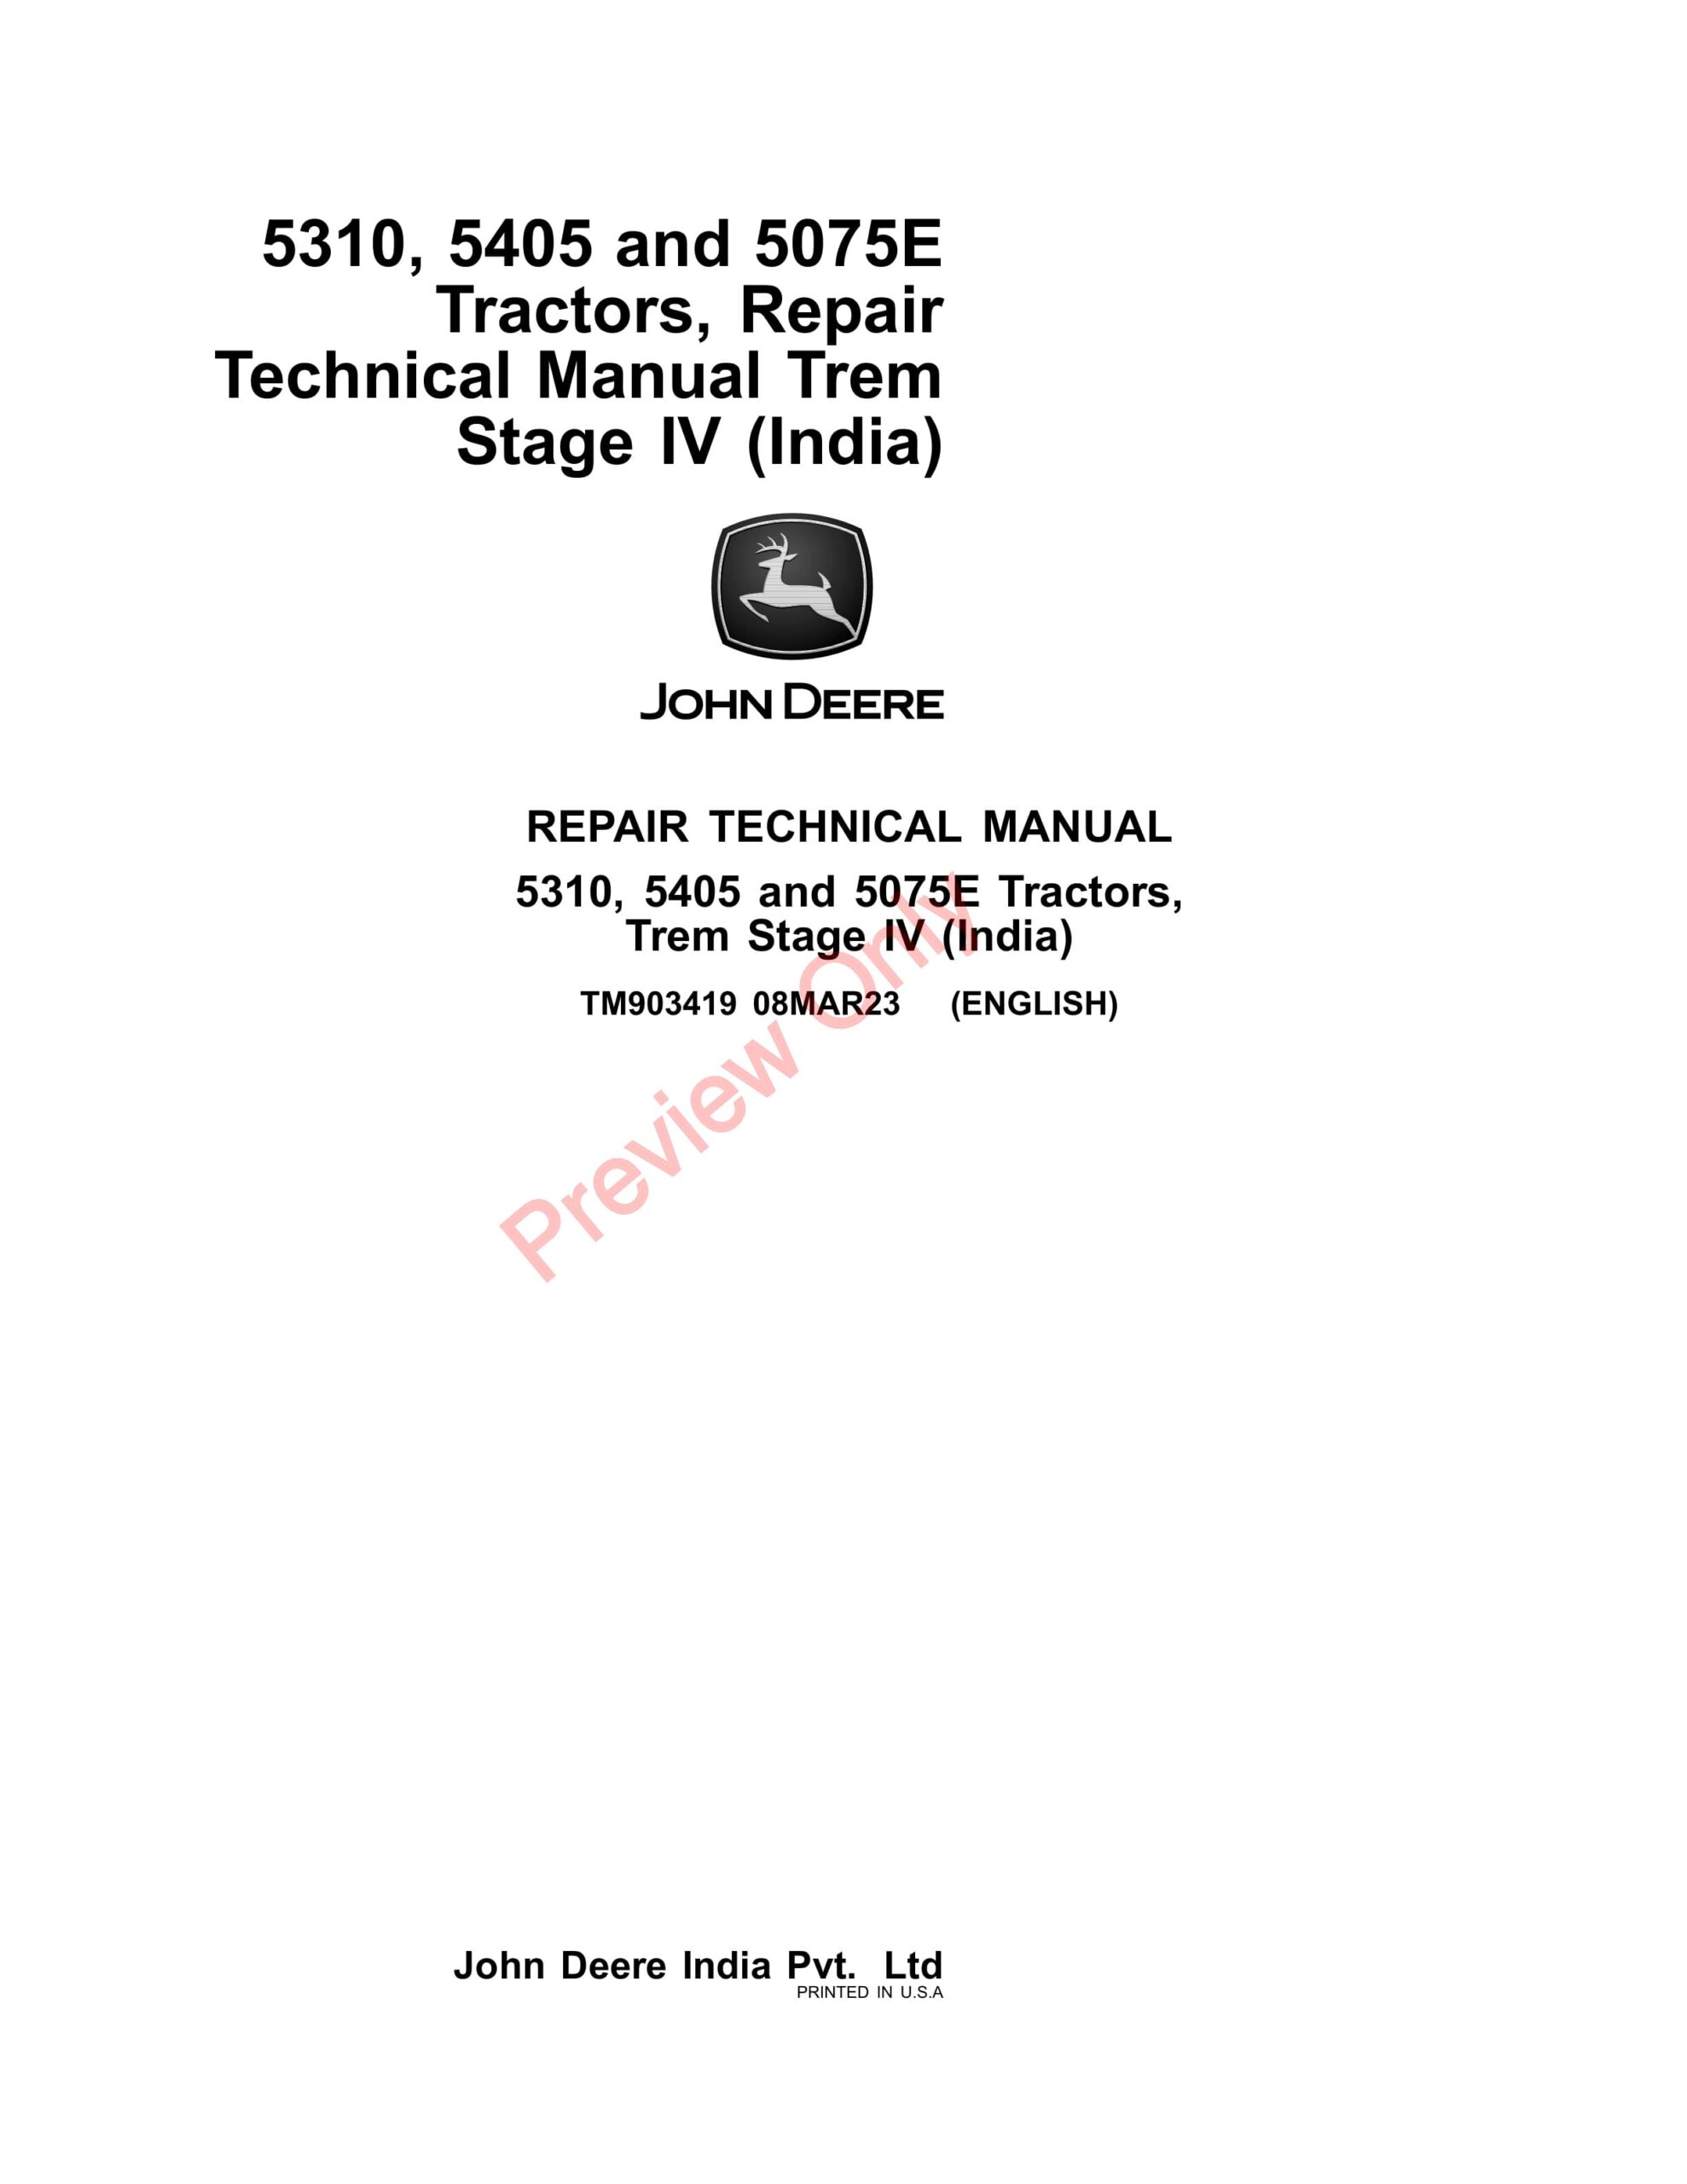 John Deere 5310, 5405 and 5075E Tractors BS4 (India) Repair Technical Manual TM903419 08MAR23-1